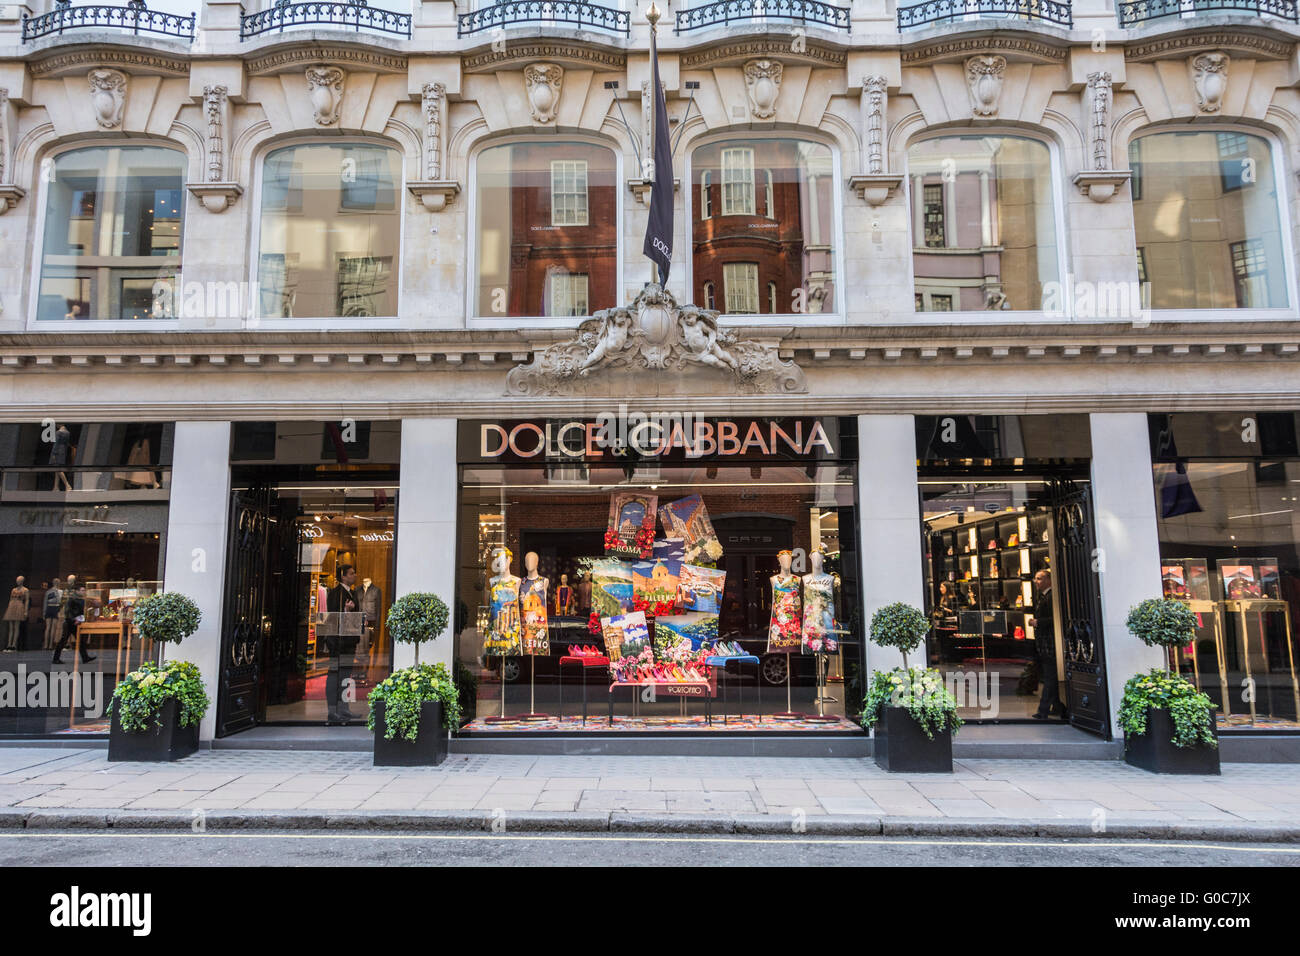 The Dolce & Gabbana store on Old Bond Street, London Stock Photo - Alamy